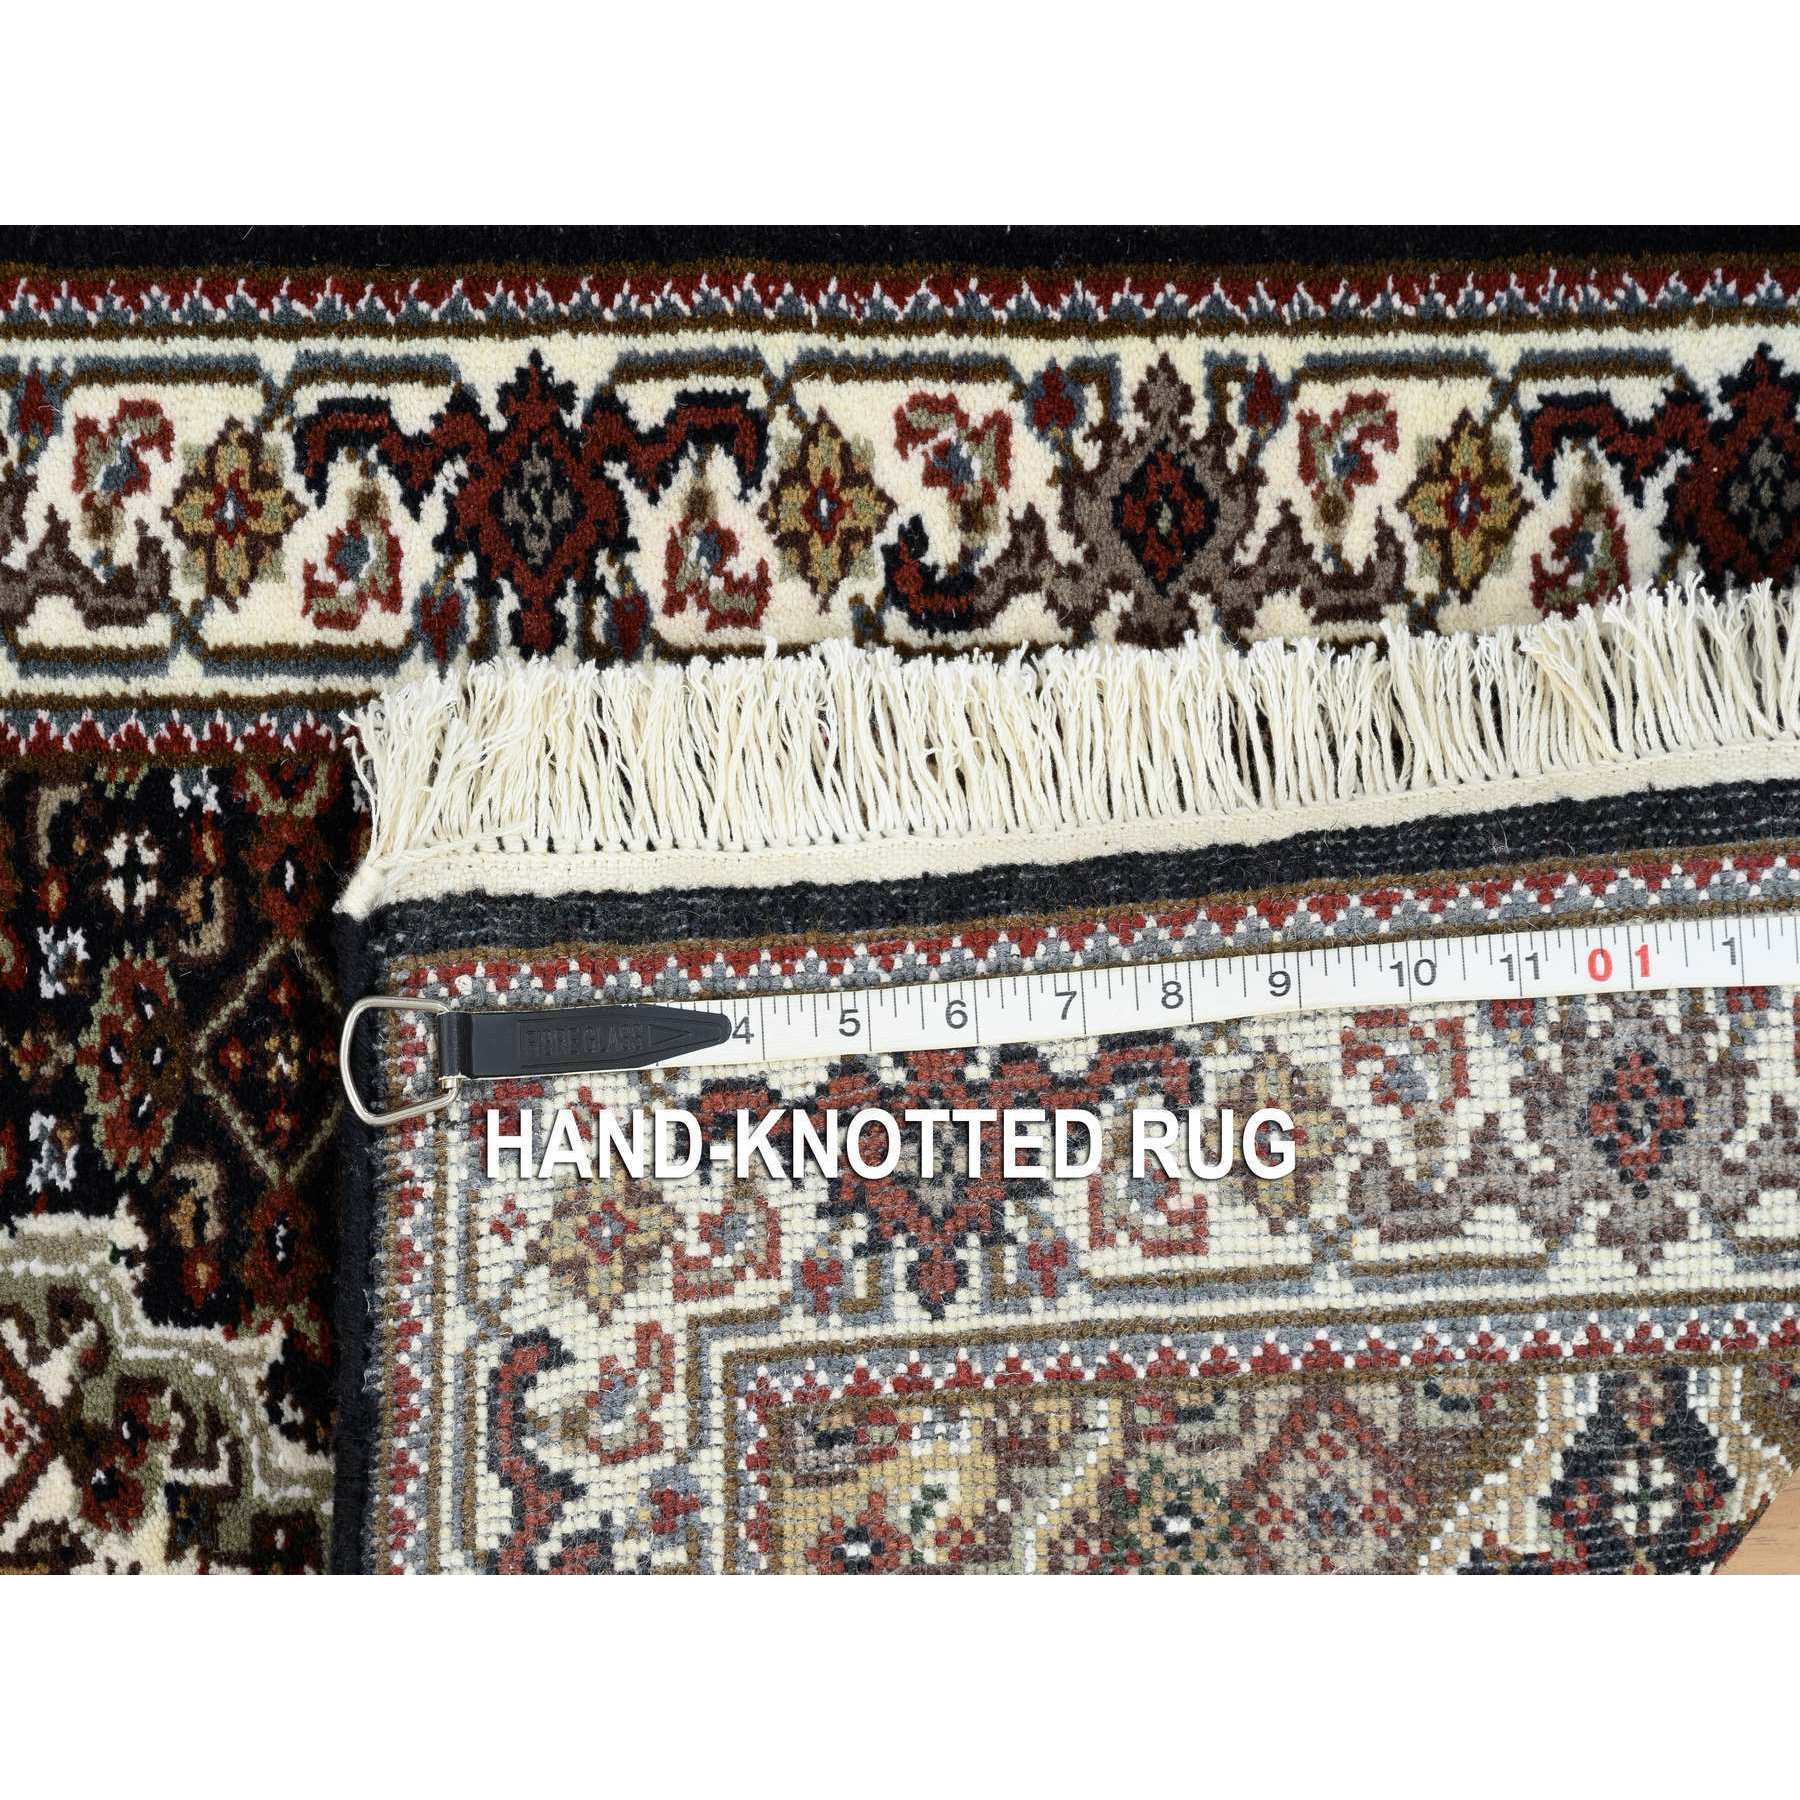 2'x8'1" Rich Black, Tabriz Mahi with Fish Medallion Design, Pure Wool, 175 KPSI, Hand Woven, Runner Oriental Rug 